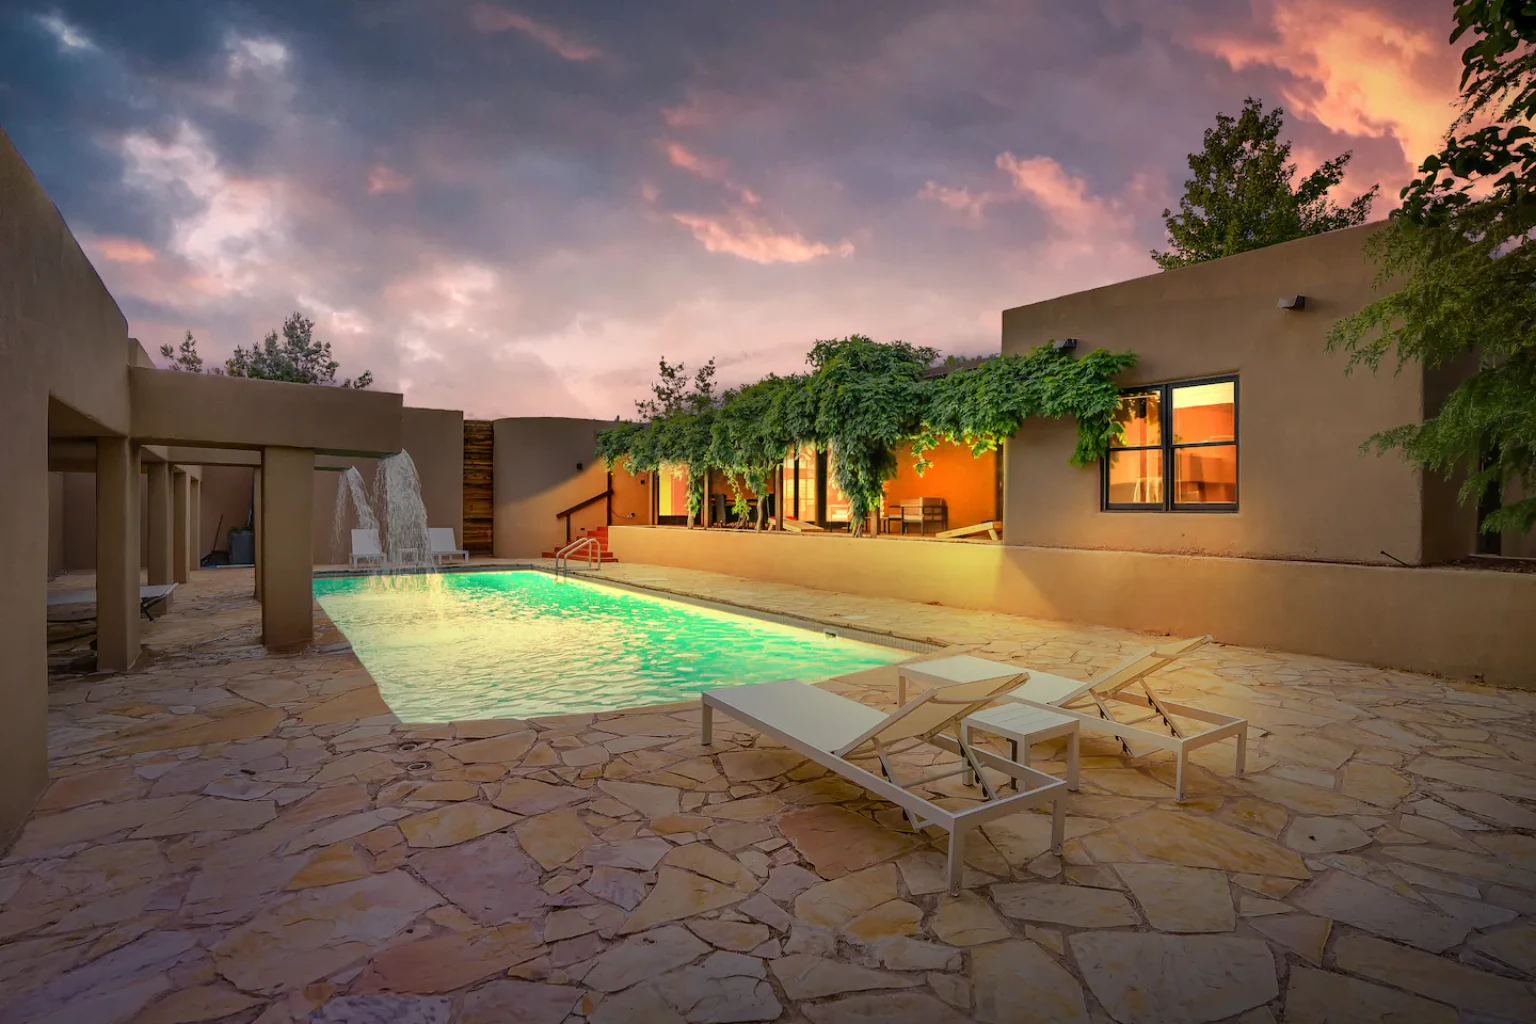 Airbnb Rental in Albuquerque, NM, USA, Lofty